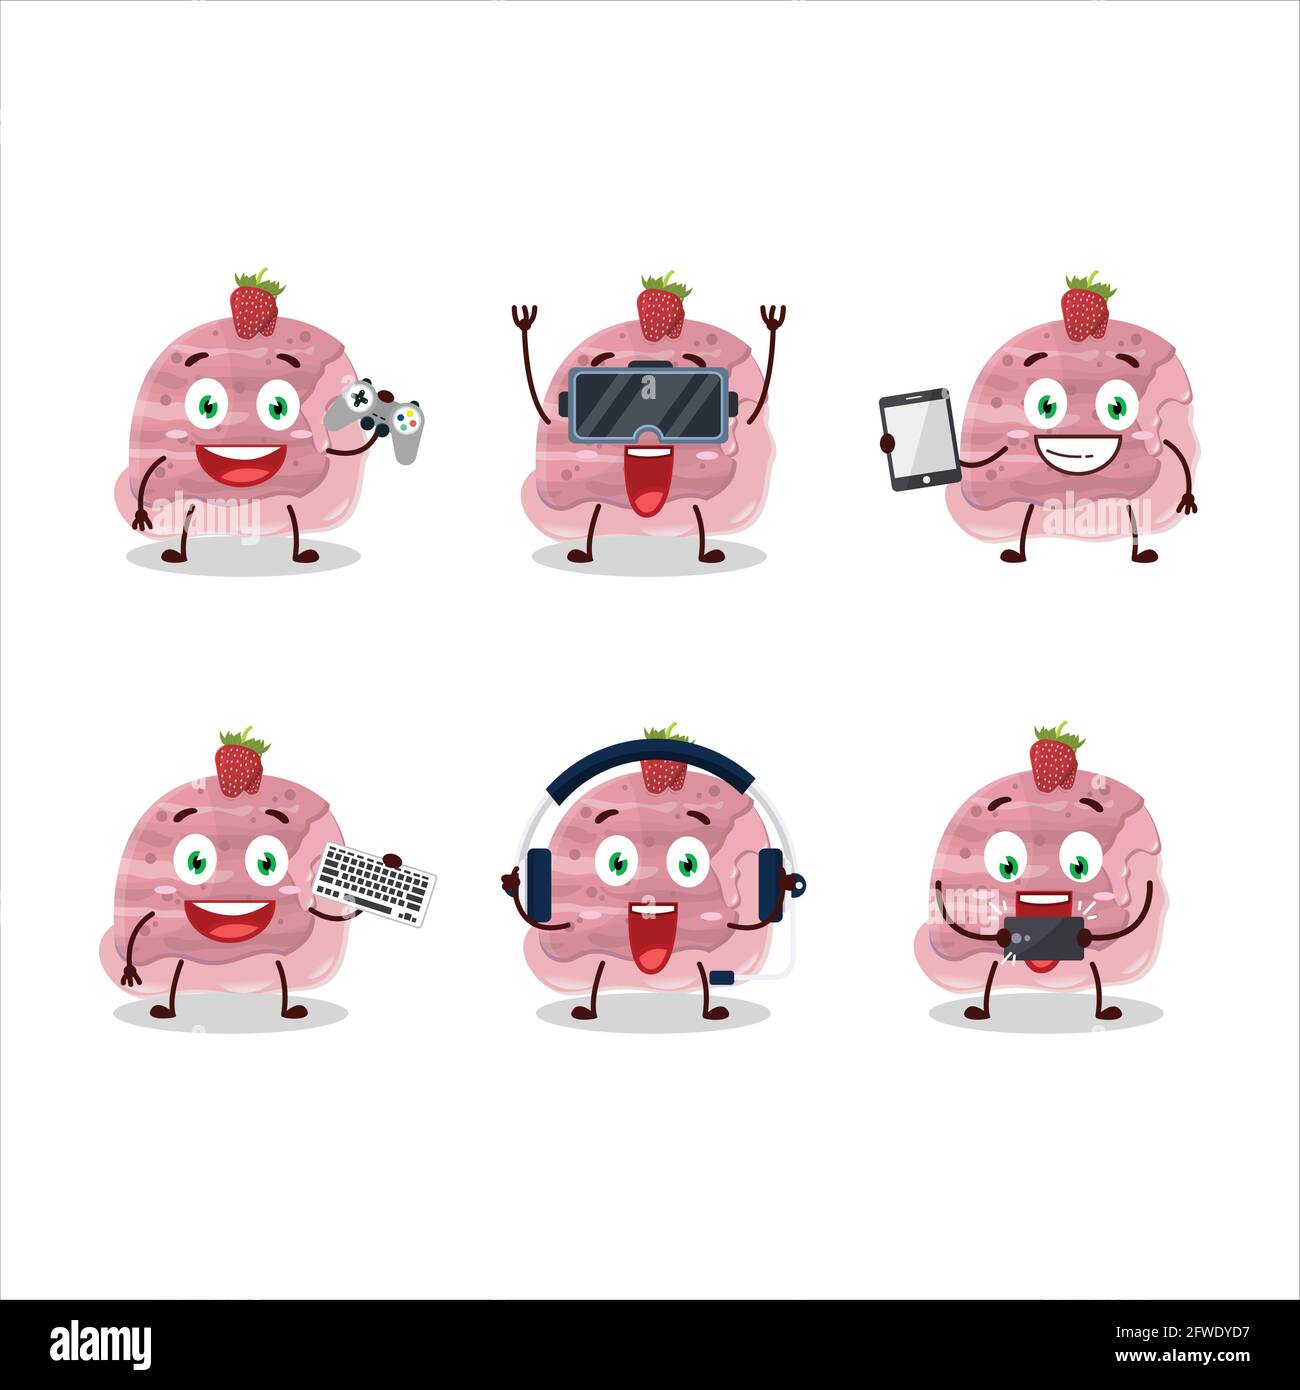 Cute ice cream scoop cartoon icon vector. Strawberry and chocolate